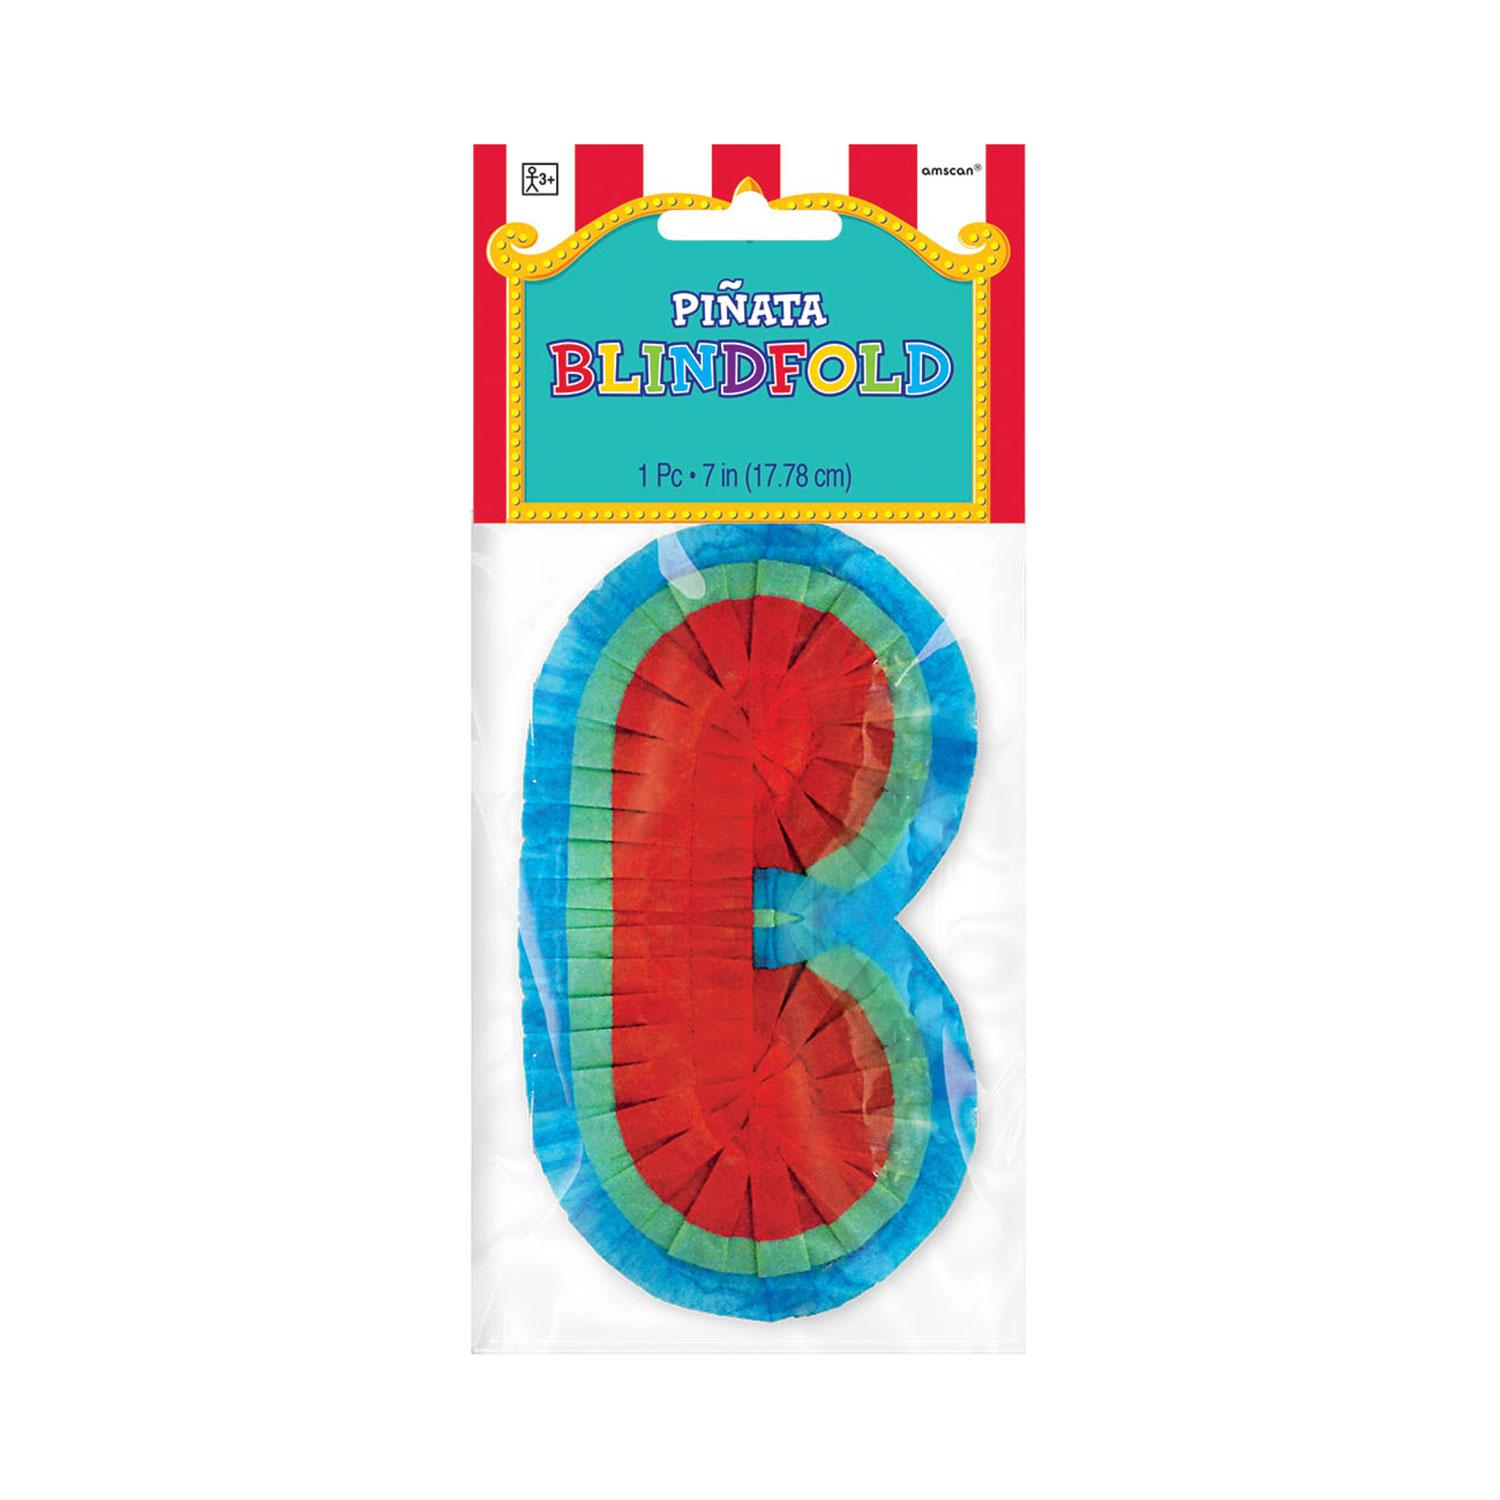 Piñata Blindfold Pinata - Party Centre